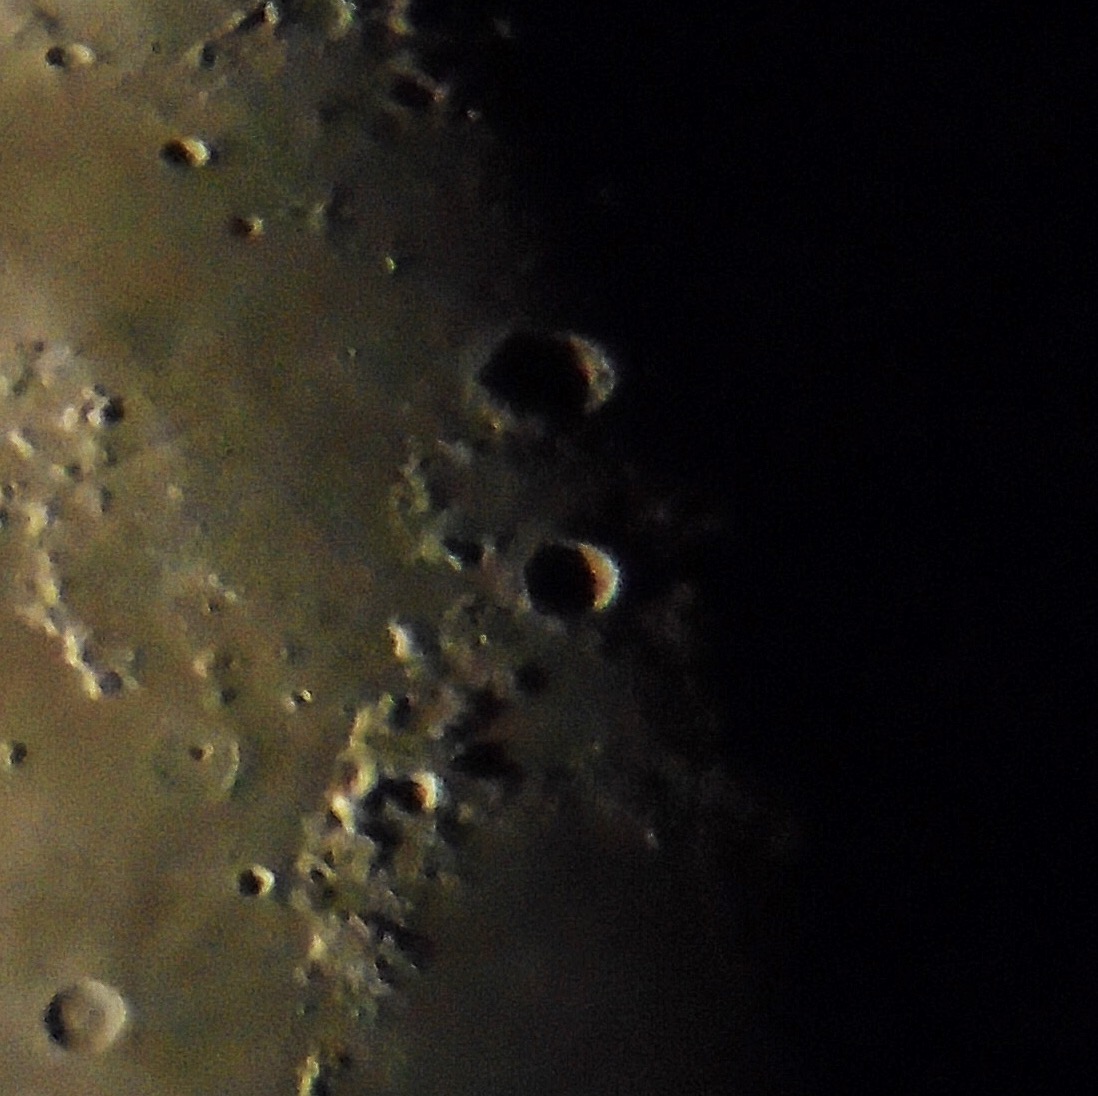 Lunar Craters_2